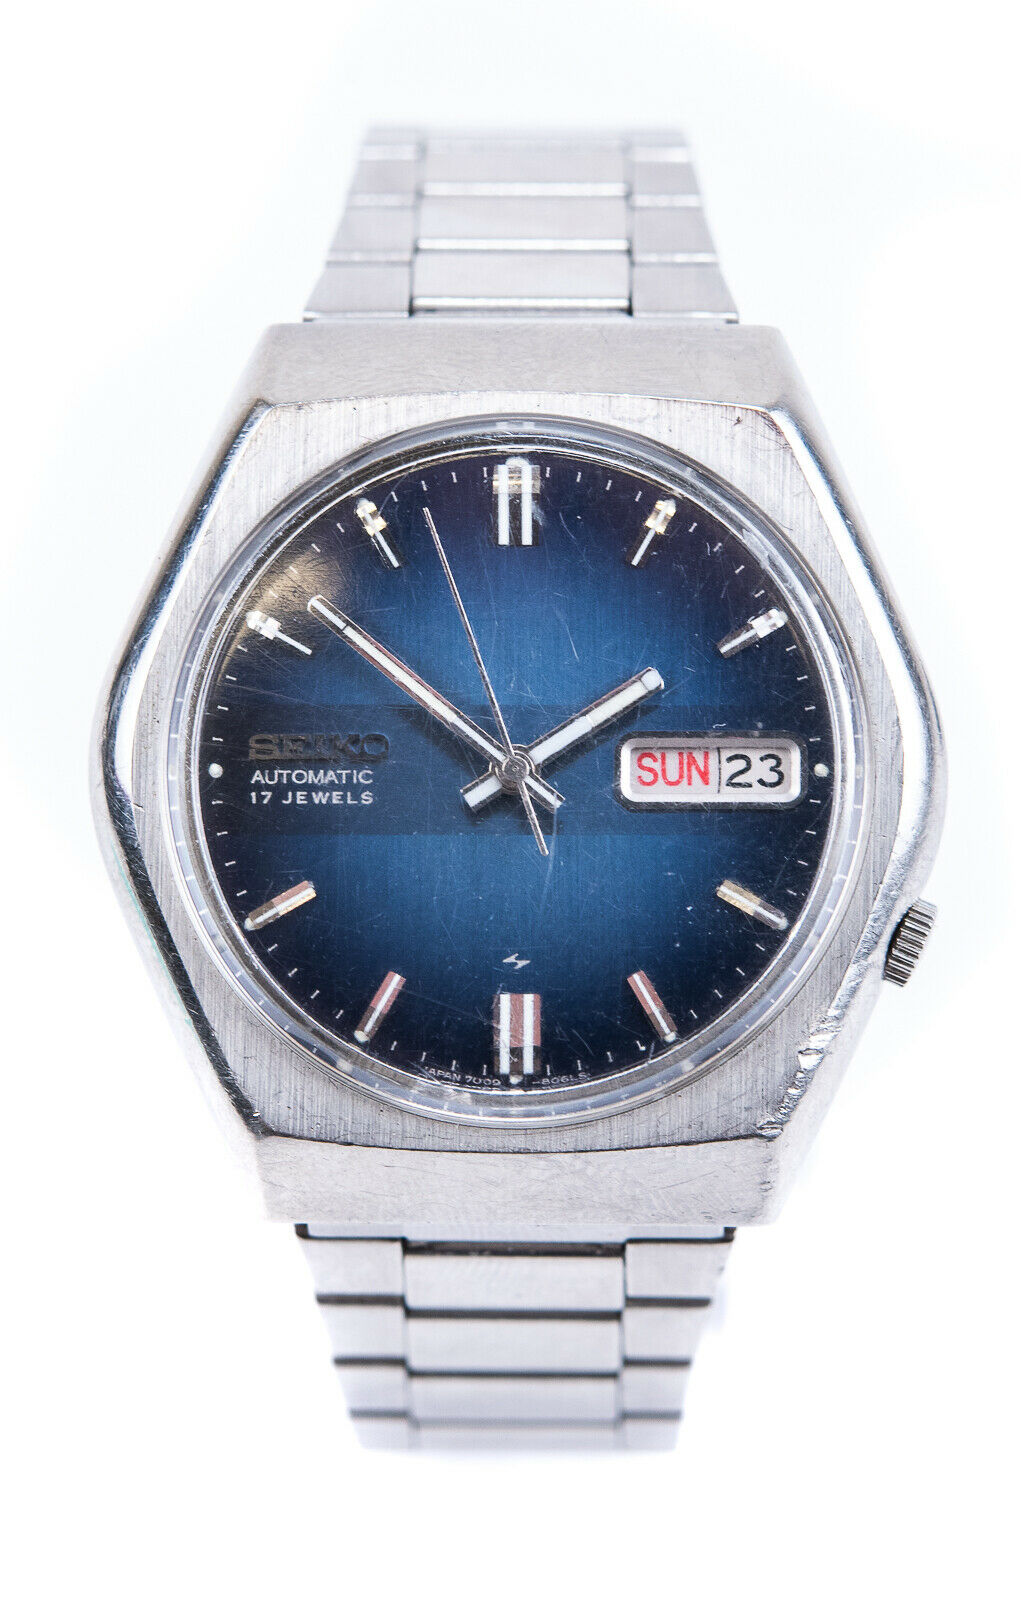 Seiko Automatic (7005-8027) Market Price | WatchCharts